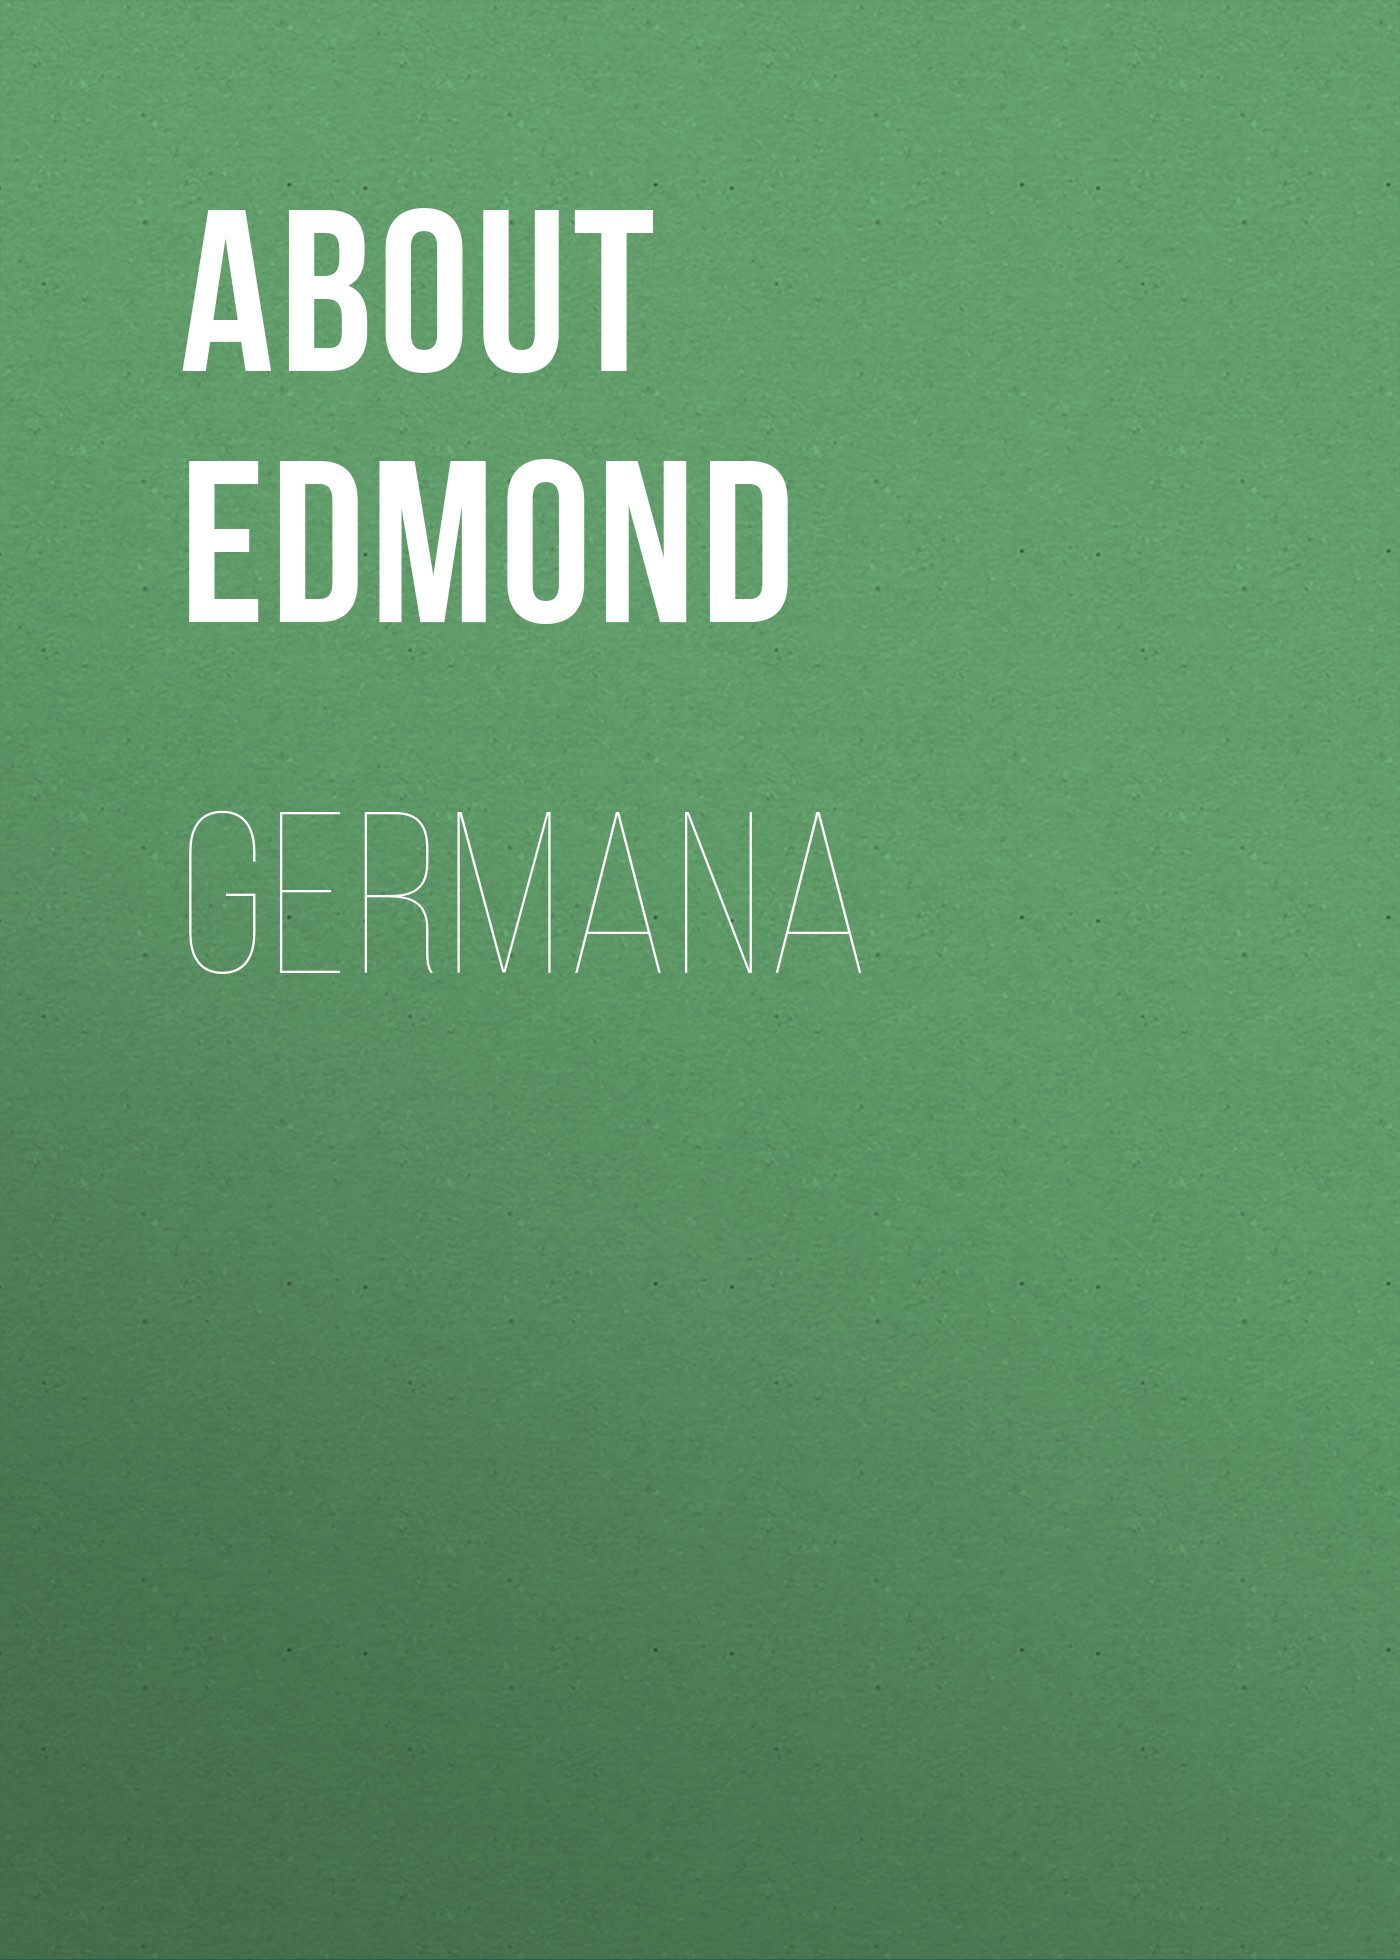 About Edmond Germana